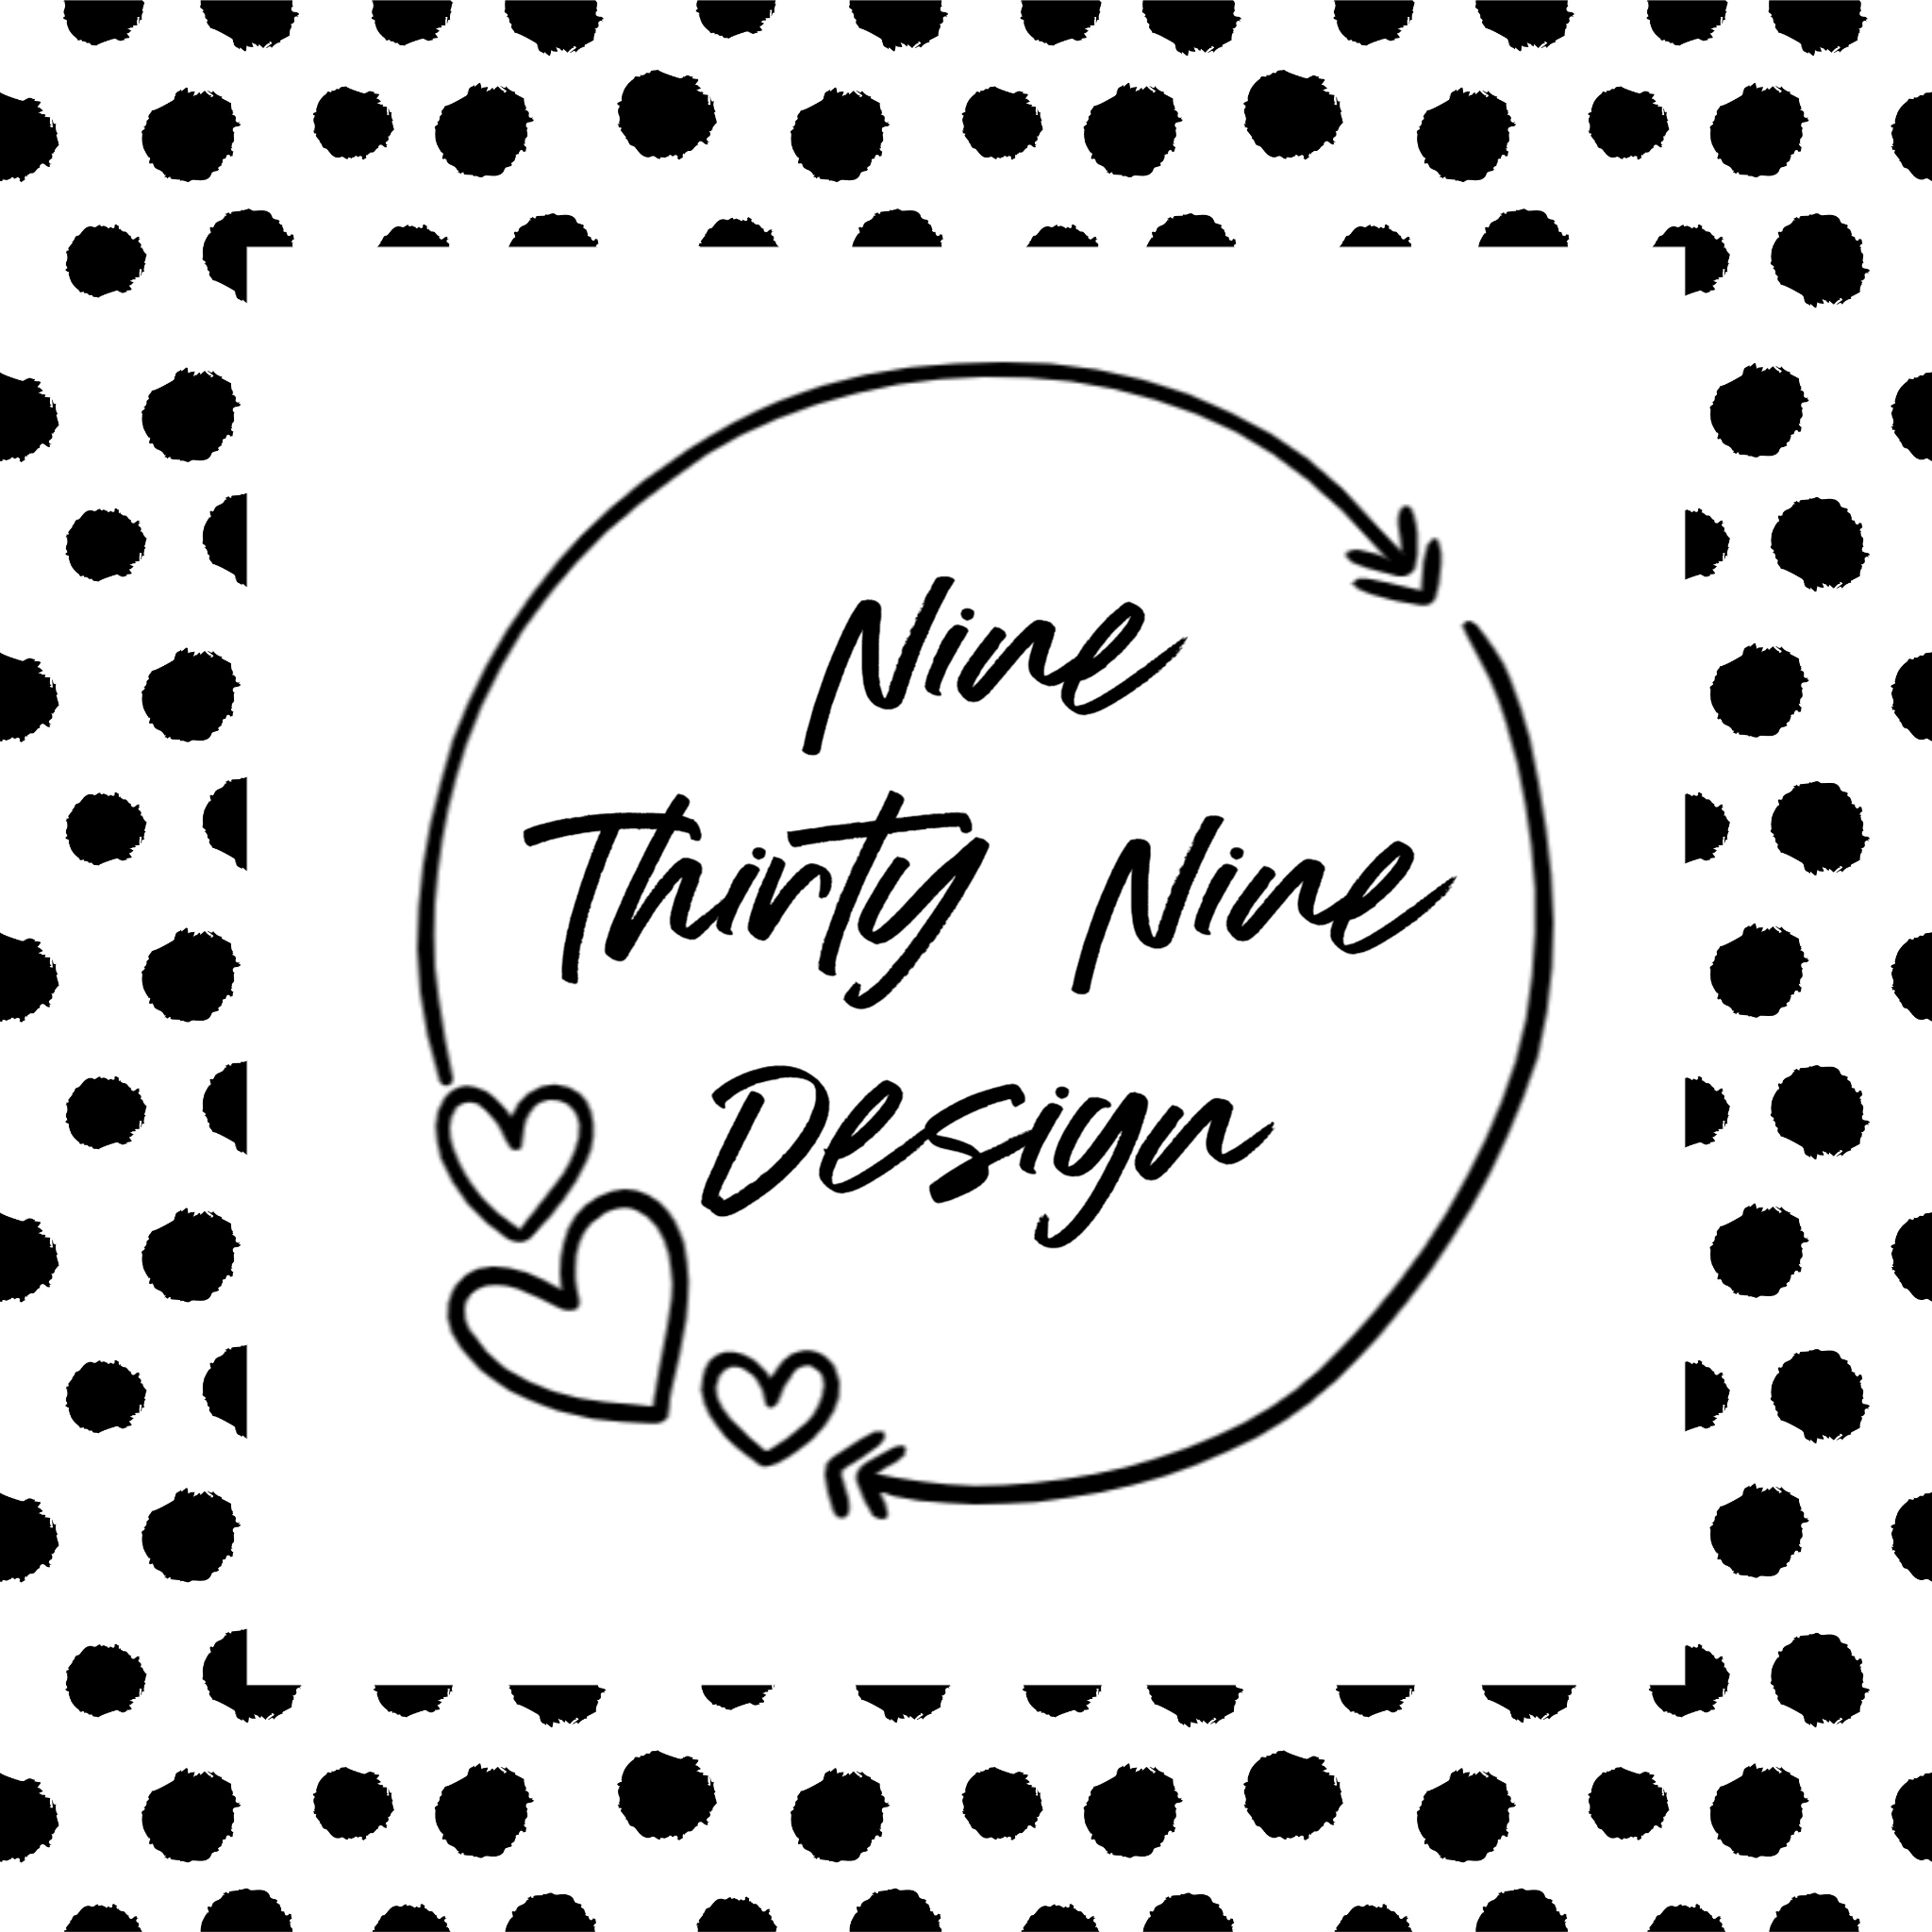 Nine Thirty Nine Design